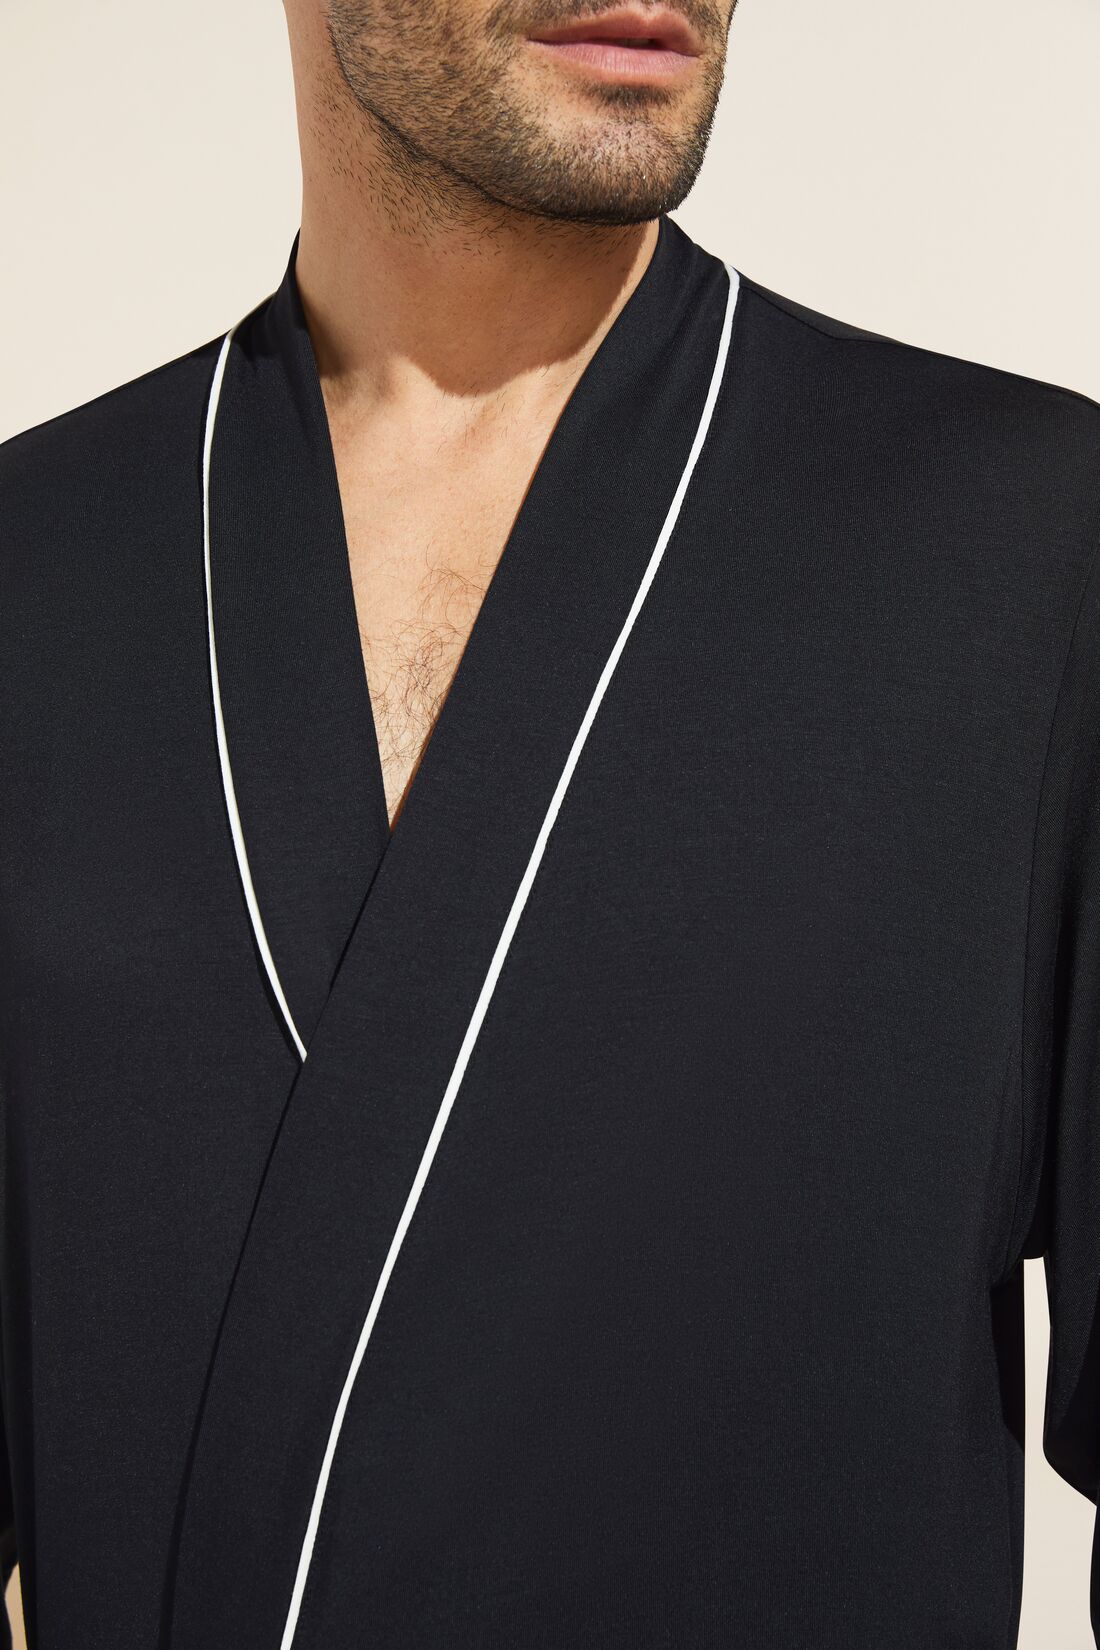 William TENCEL™ Modal Robe - Black/Ivory